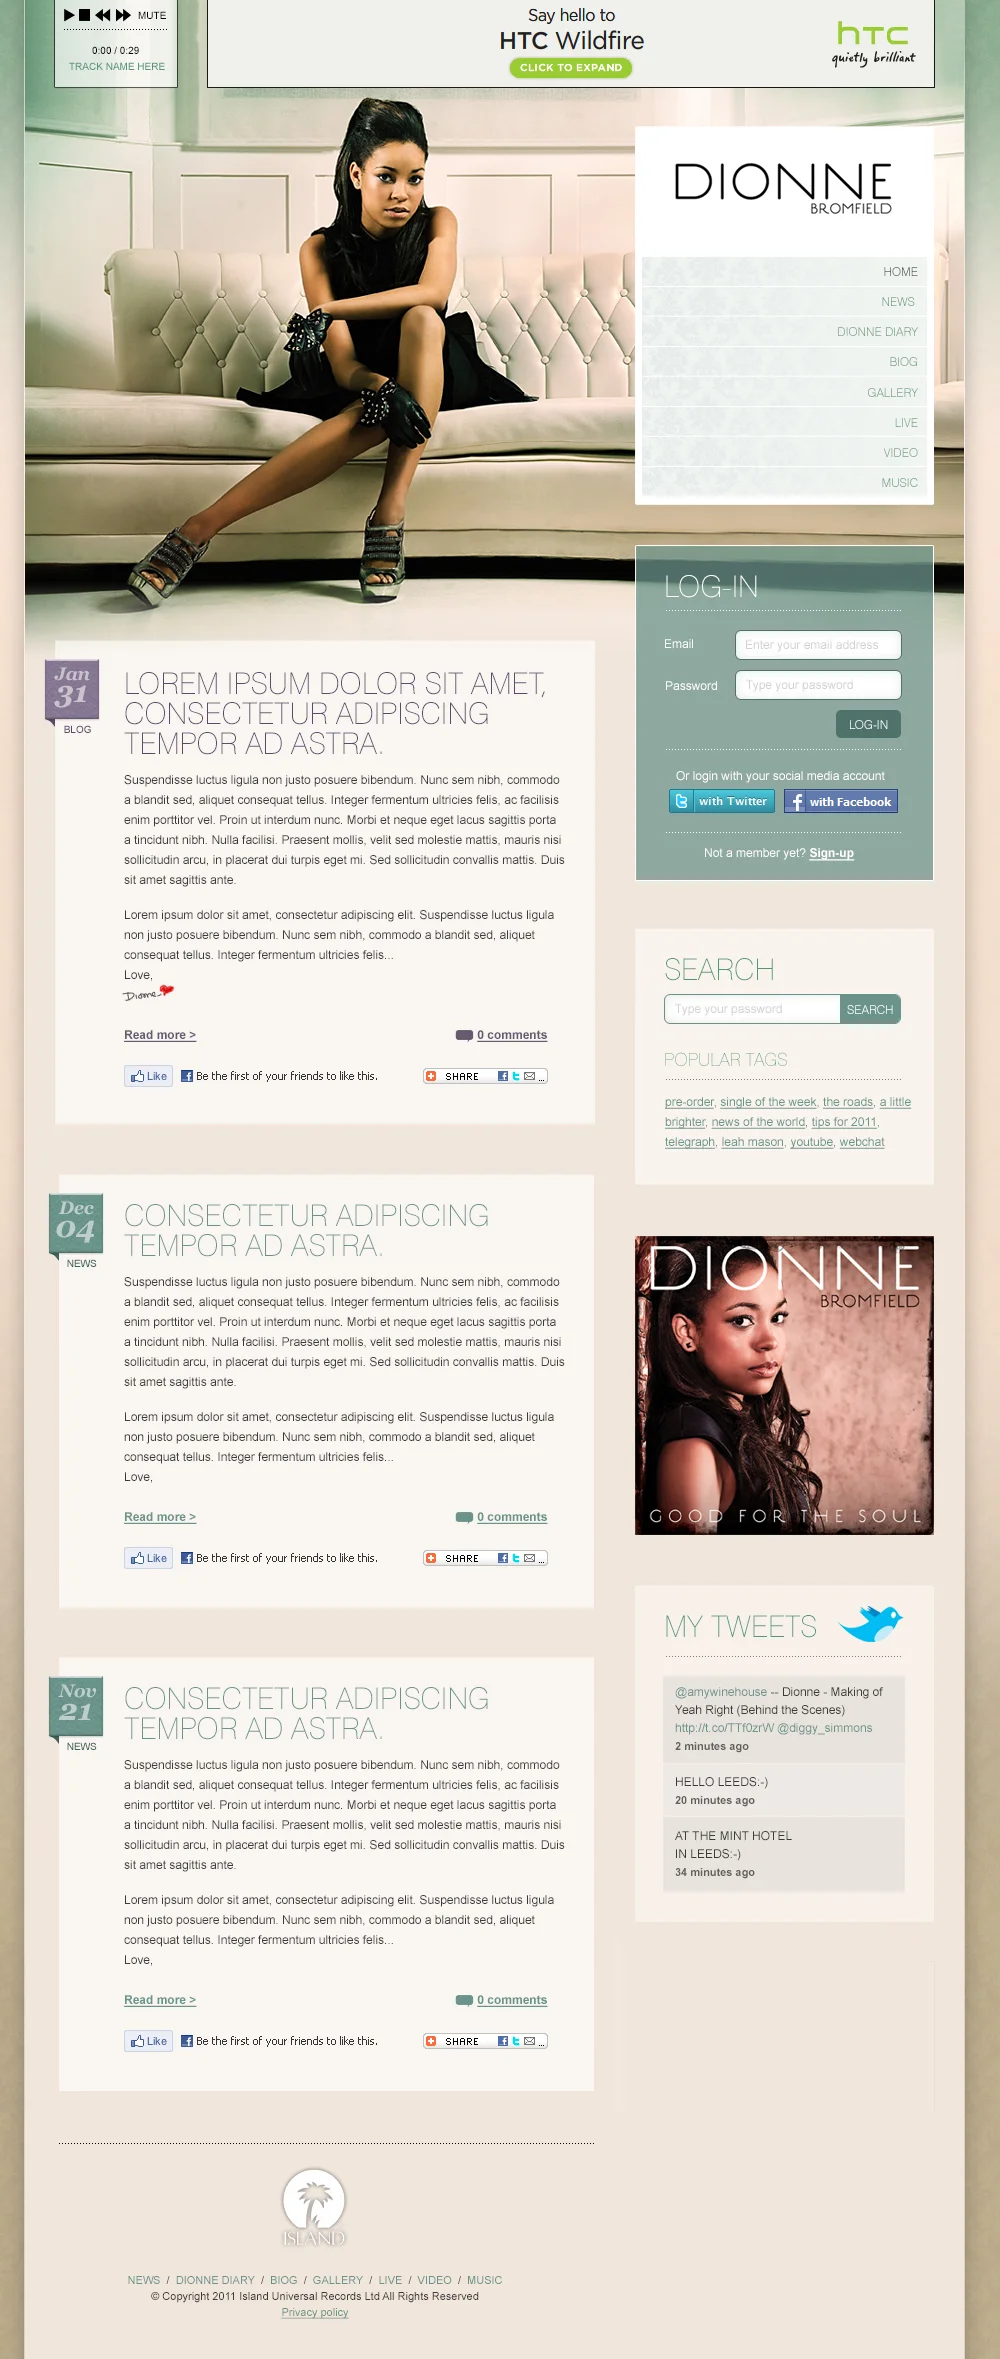 Dionne Bromfield website